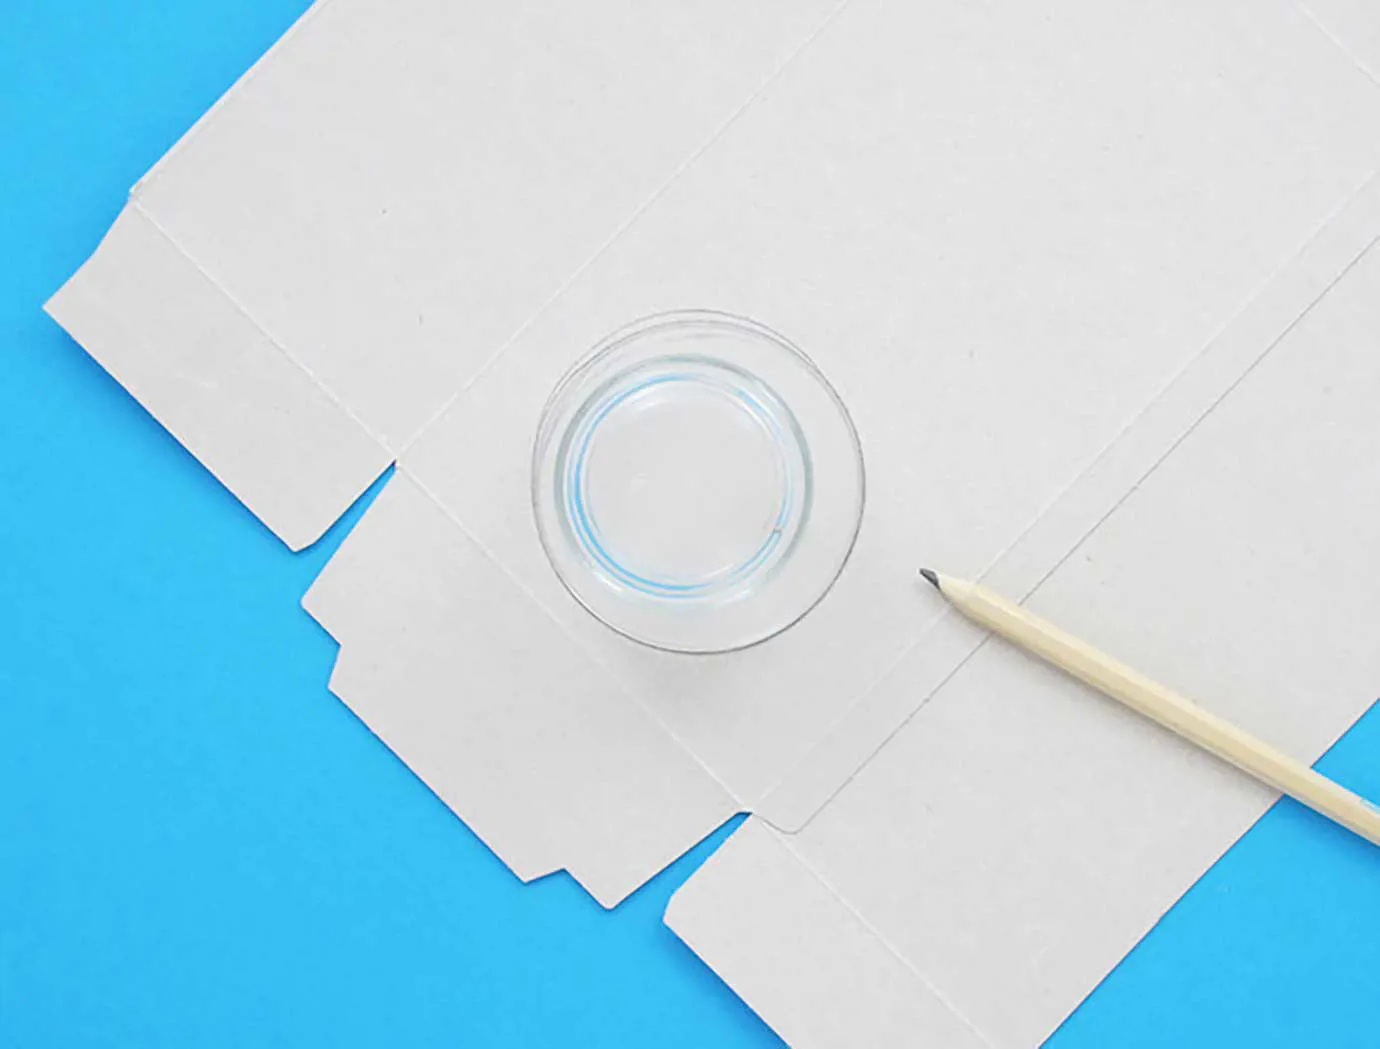 Otvorena i izravnana kutija maramica na plavoj površini s  malom čašom i olovkom.